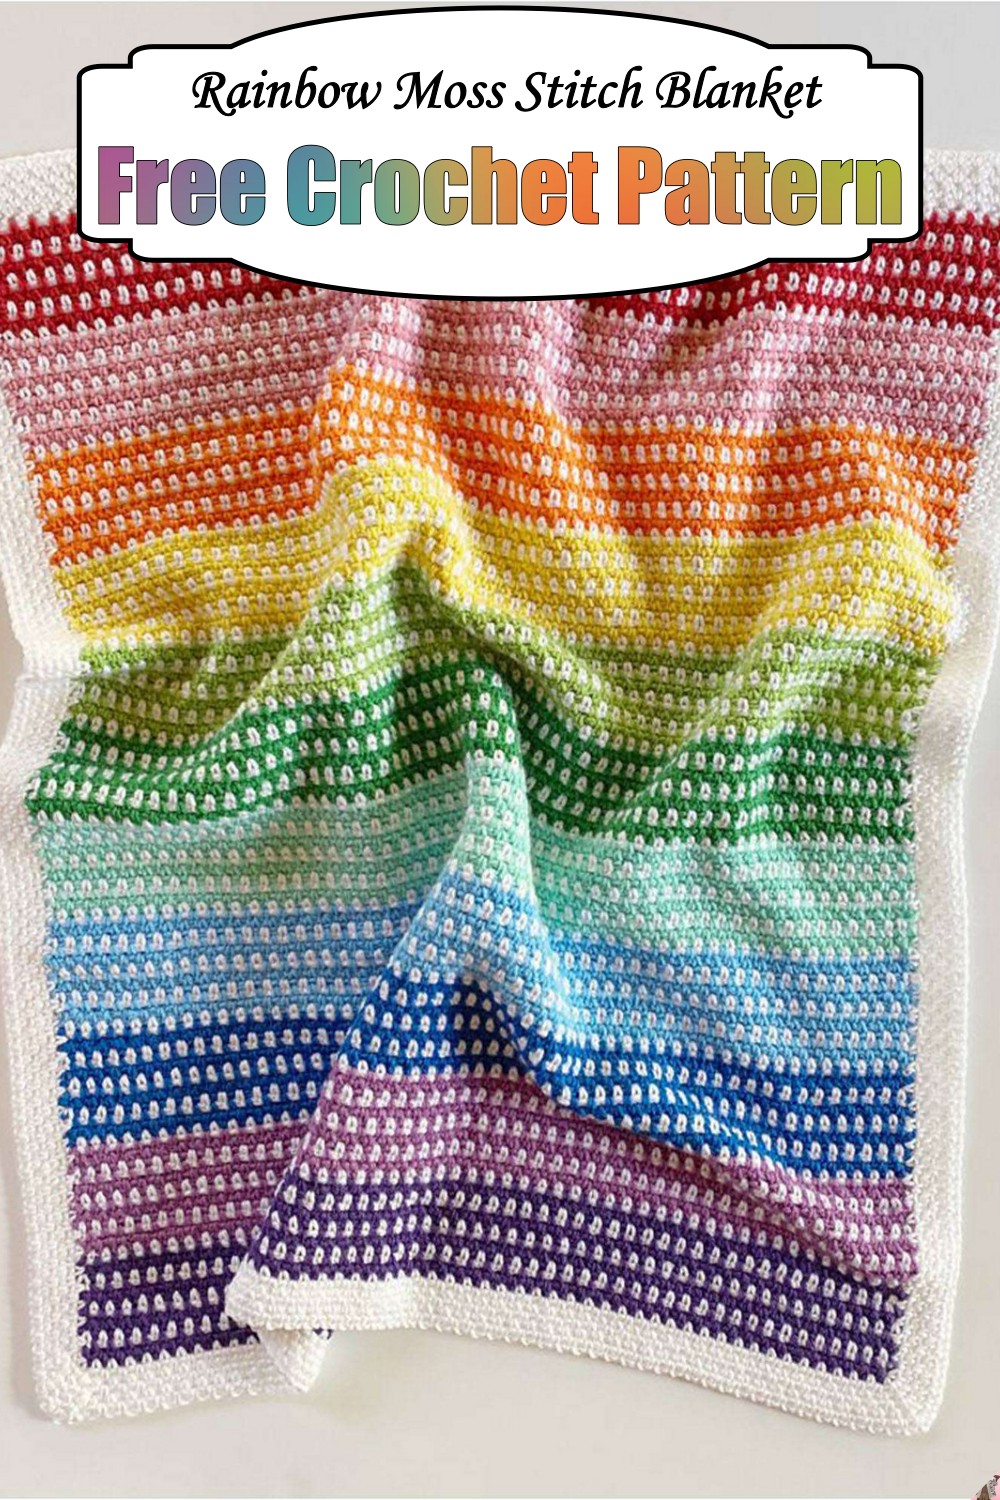 Rainbow Moss Stitch Blanket